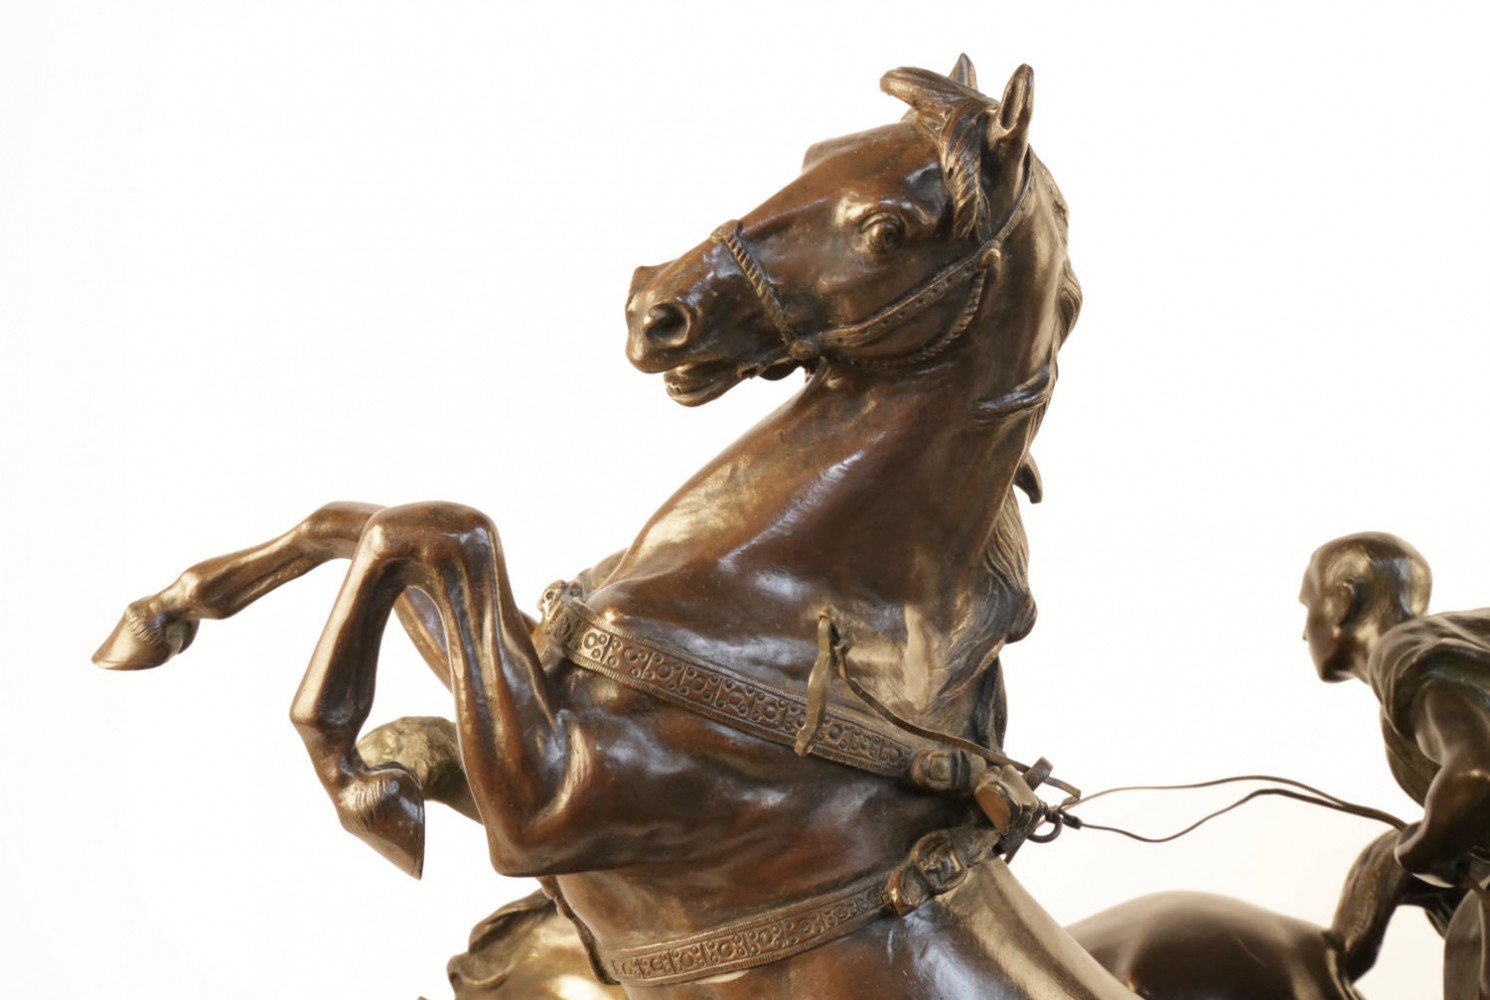 Giuseppe Ferrari 19th Century Bronze, Horse and Chariot by Giuseppe Ferrari